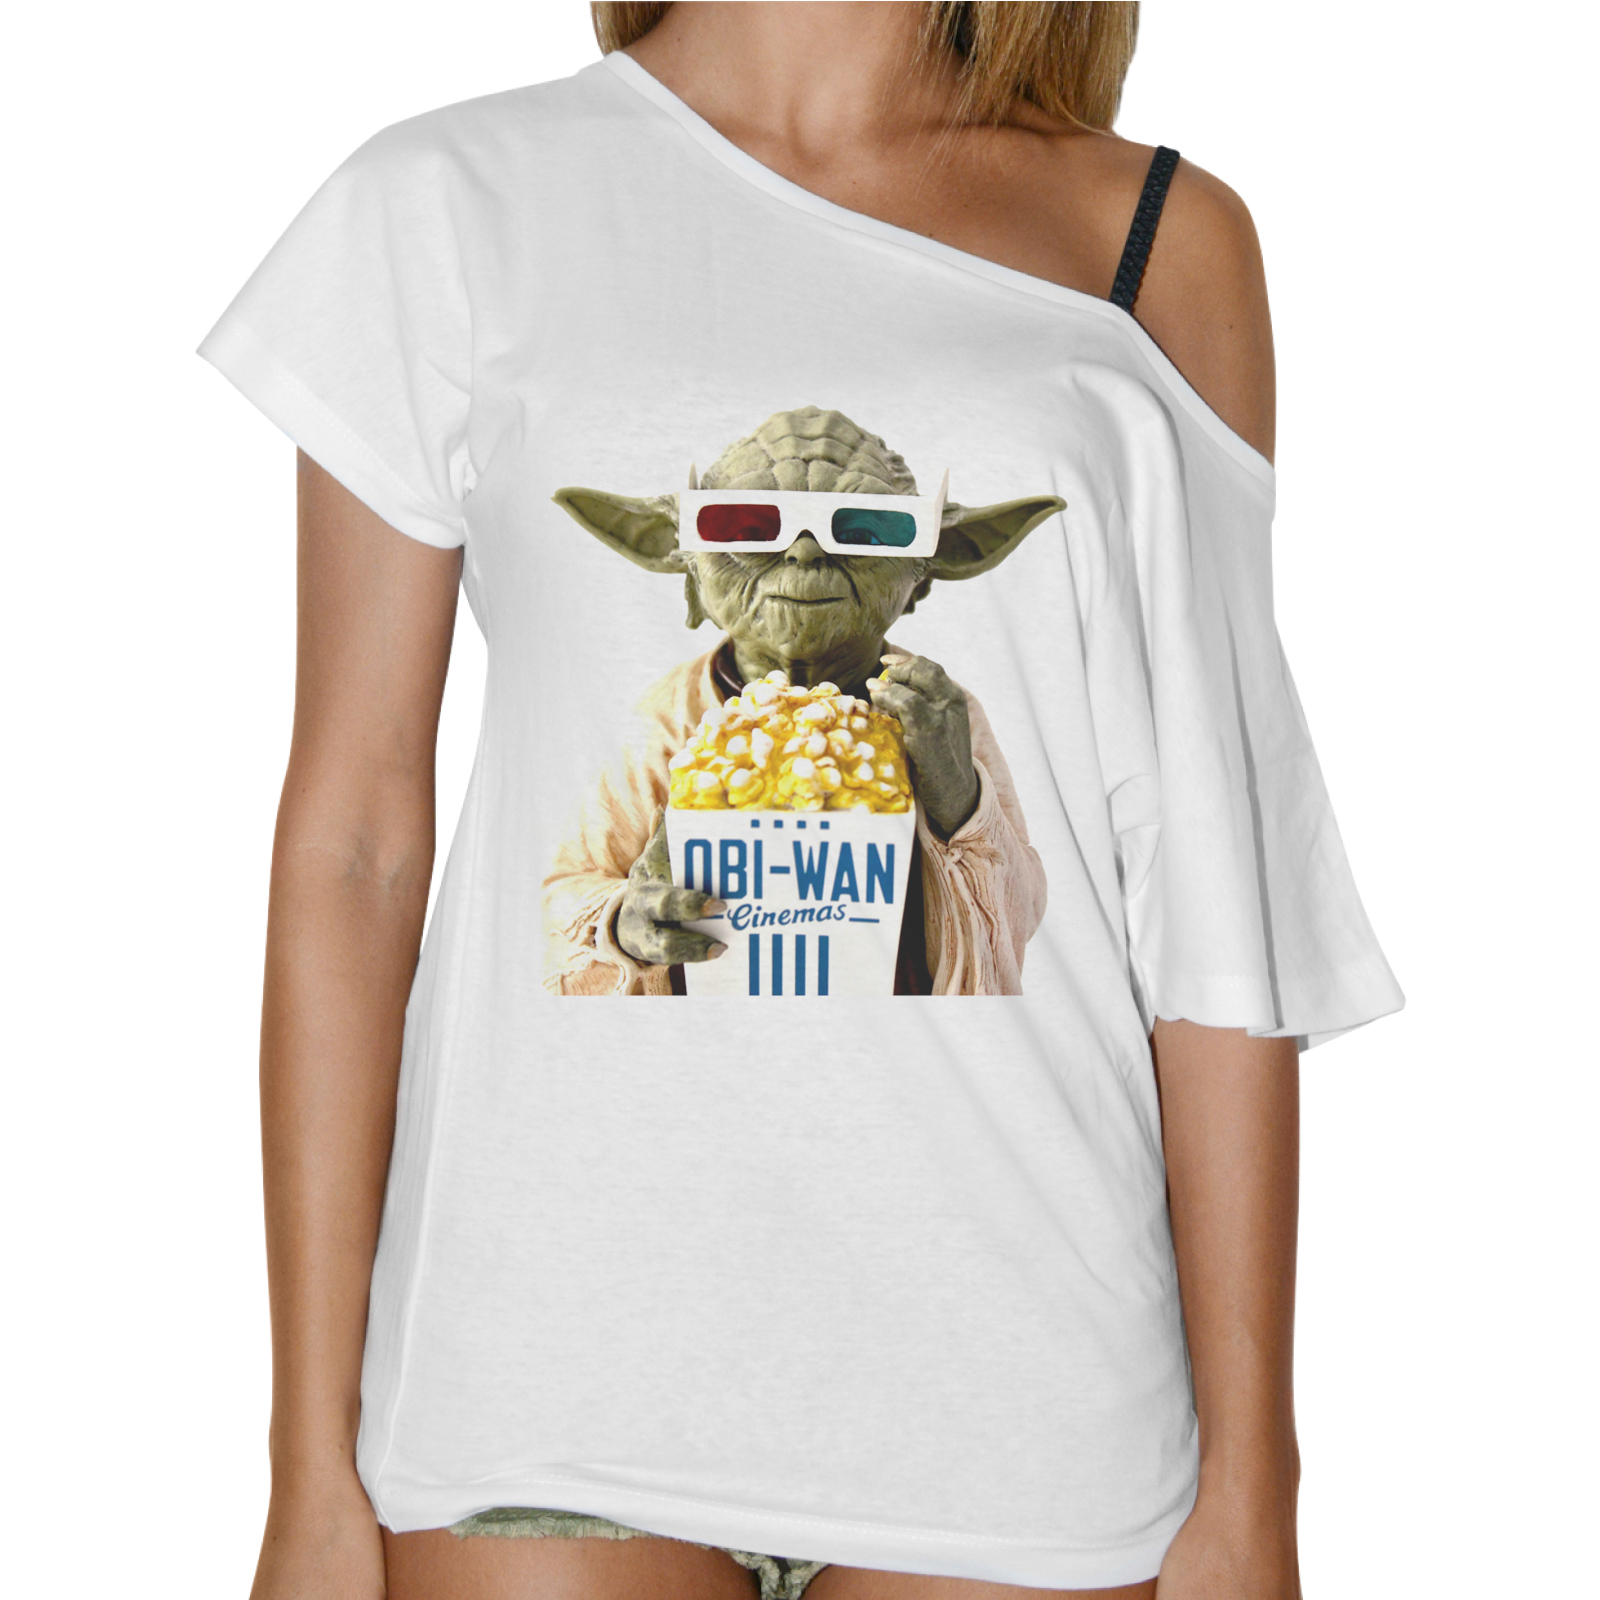 T-Shirt Donna Collo Barca OBI POP CORN 1